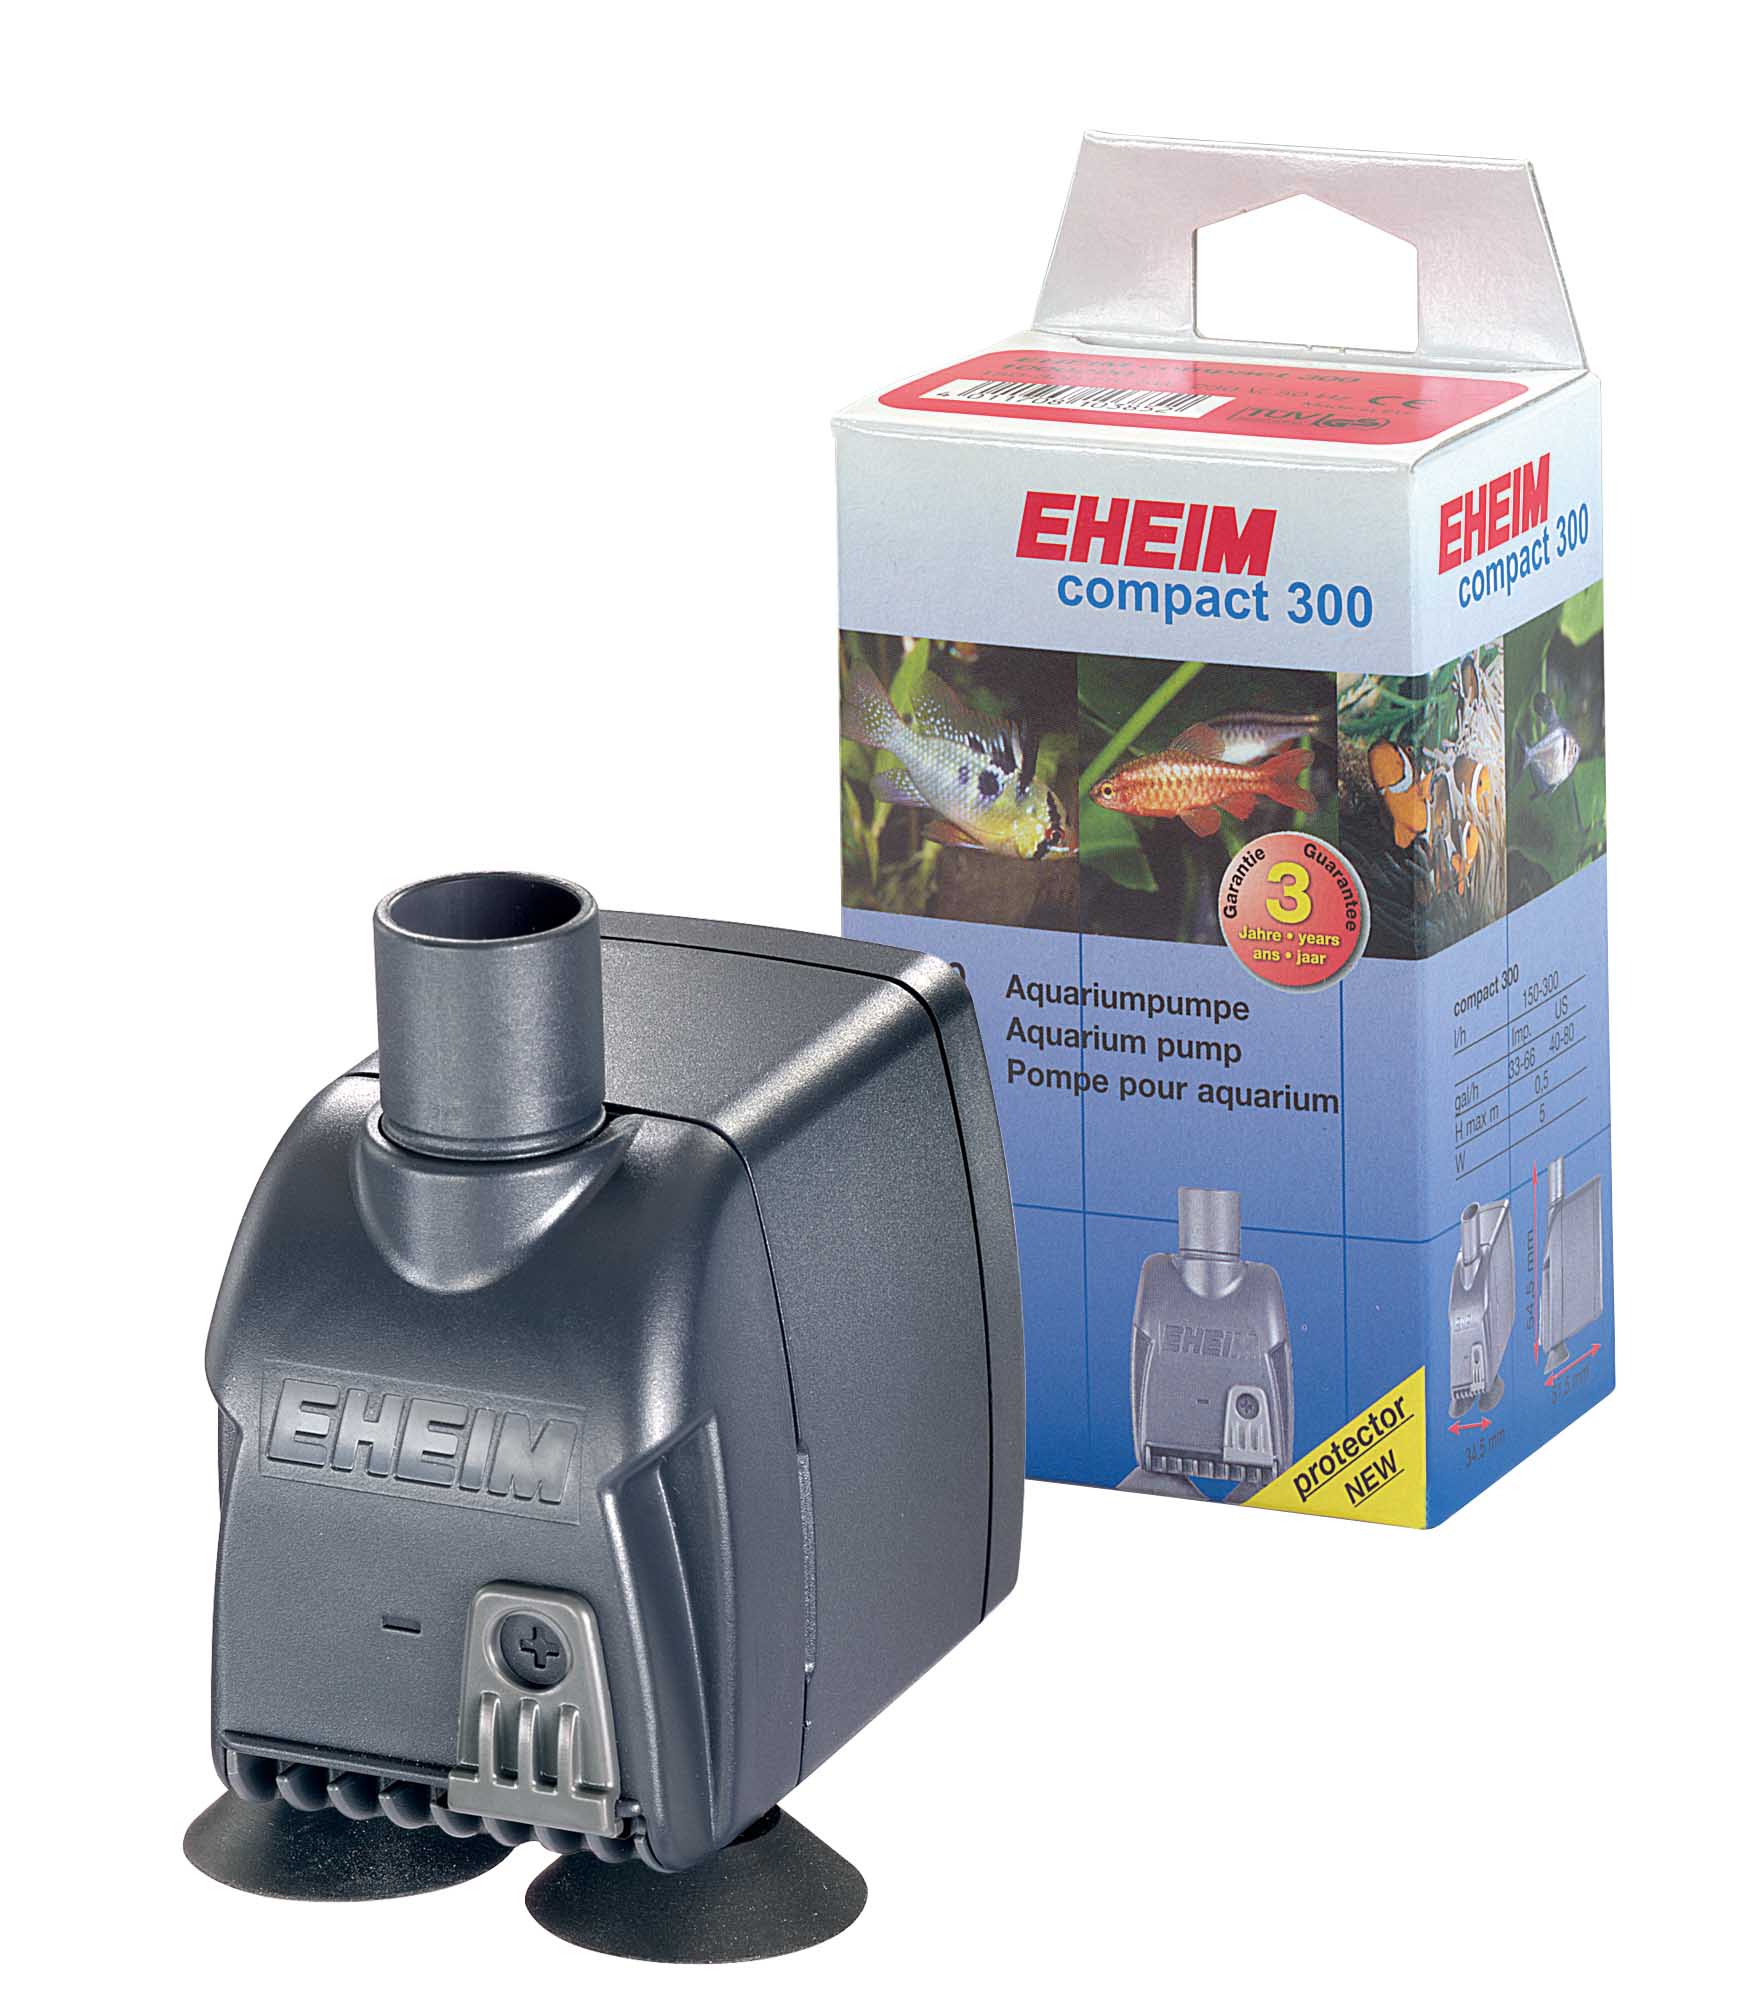 EHEIM compact 300 Компактная погружная помпа 150-300л/ч h0.5м 5Вт 54.5х34.5х51.5мм - Кликните на картинке чтобы закрыть